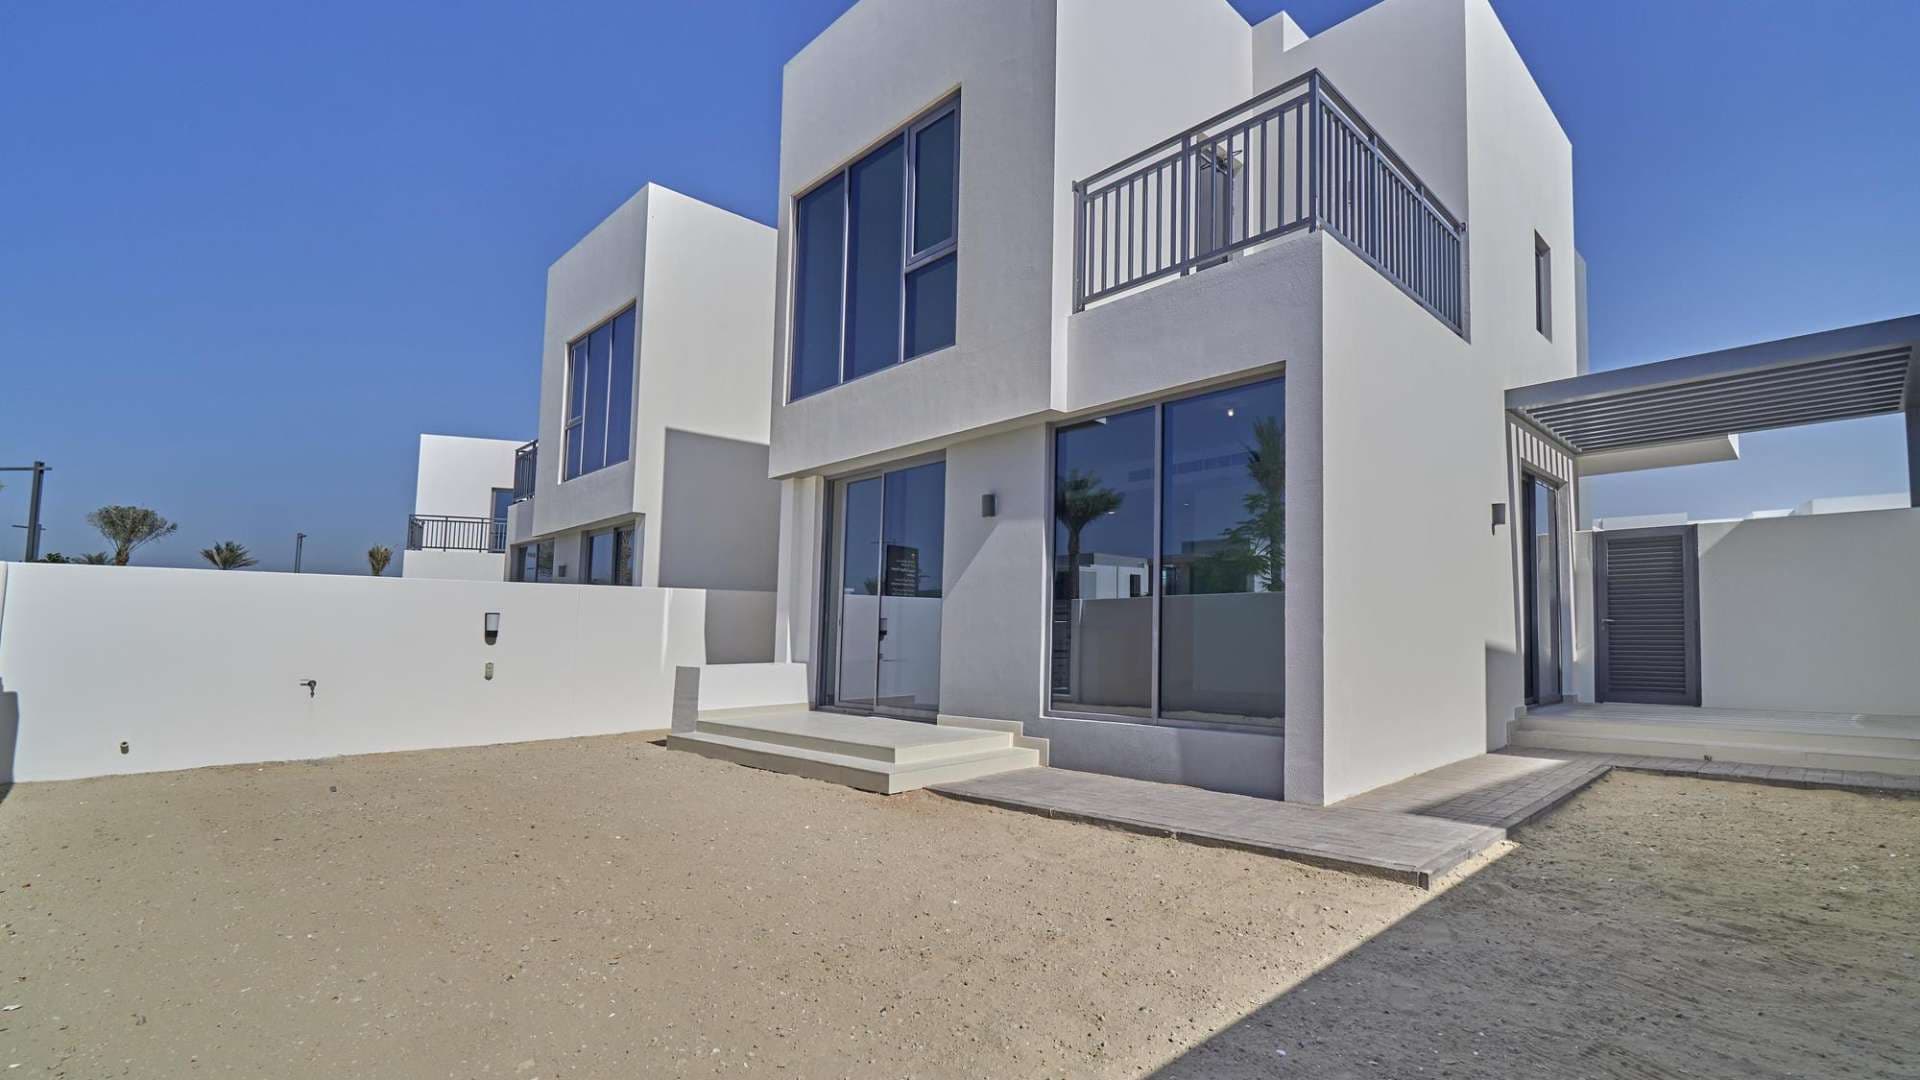 4 Bedroom Villa For Sale Maple At Dubai Hills Estate Lp10402 22917004286f6200.jpg